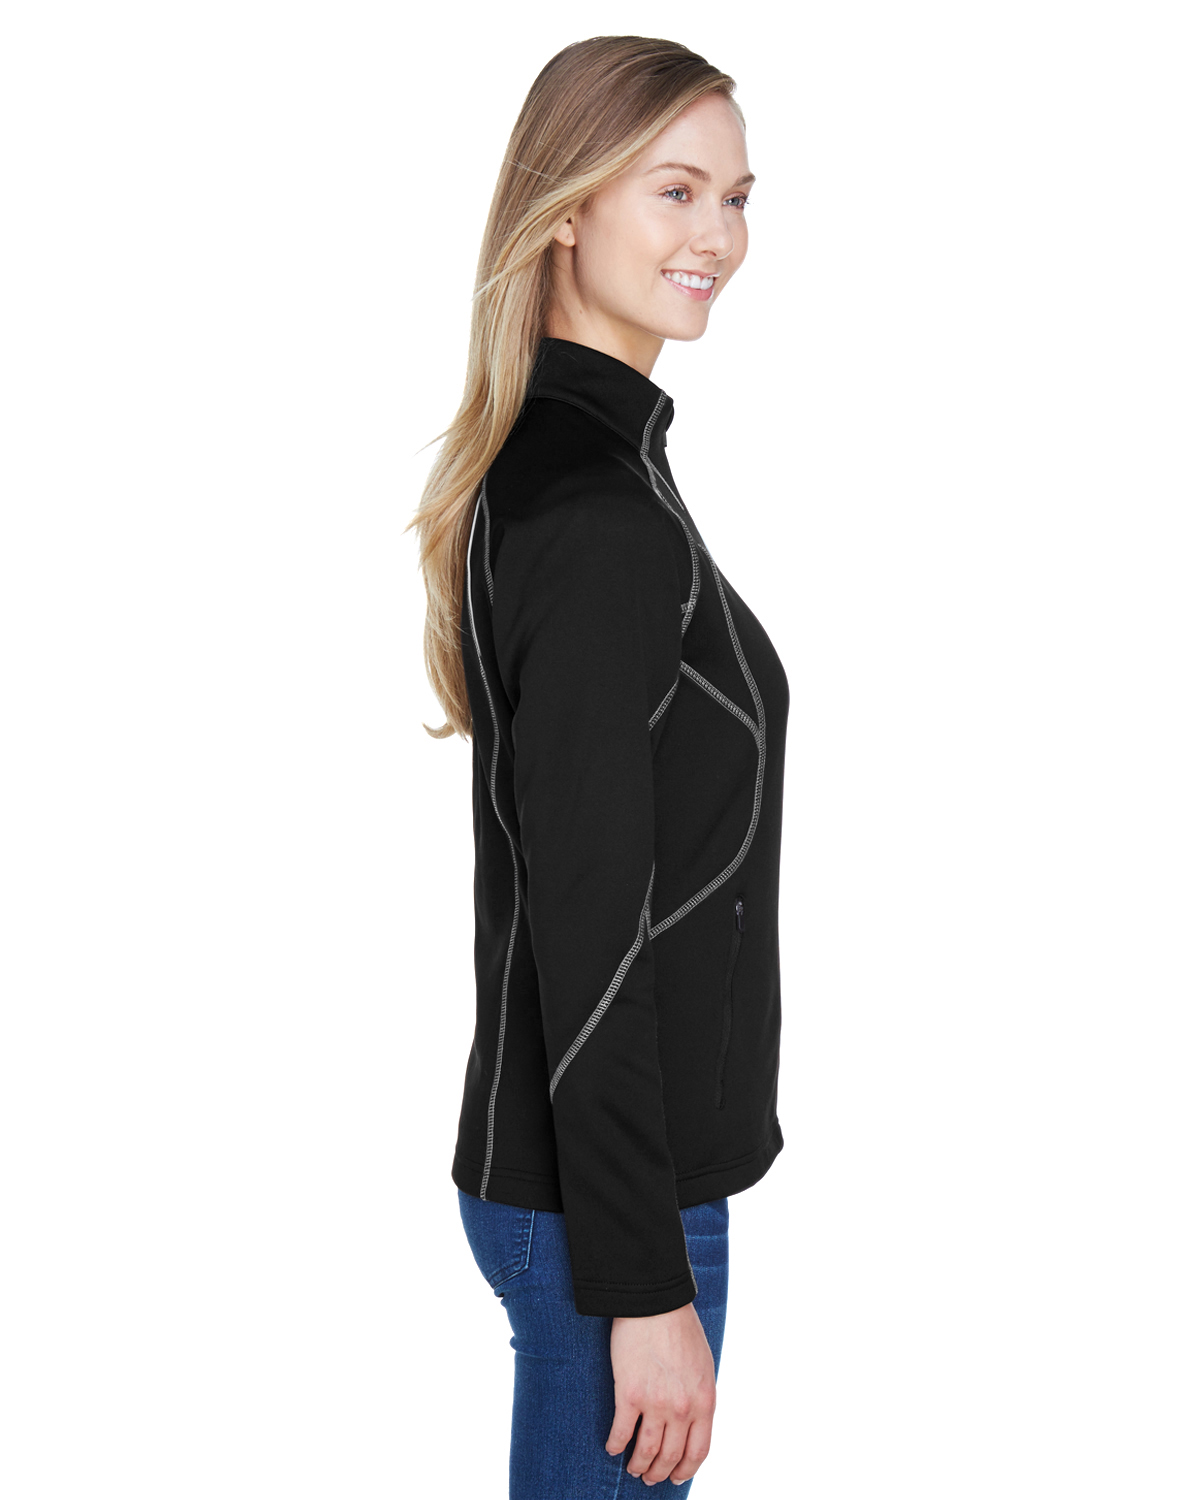 Ladies' Gravity Performance Fleece Jacket - BLACK - S - image 3 of 3